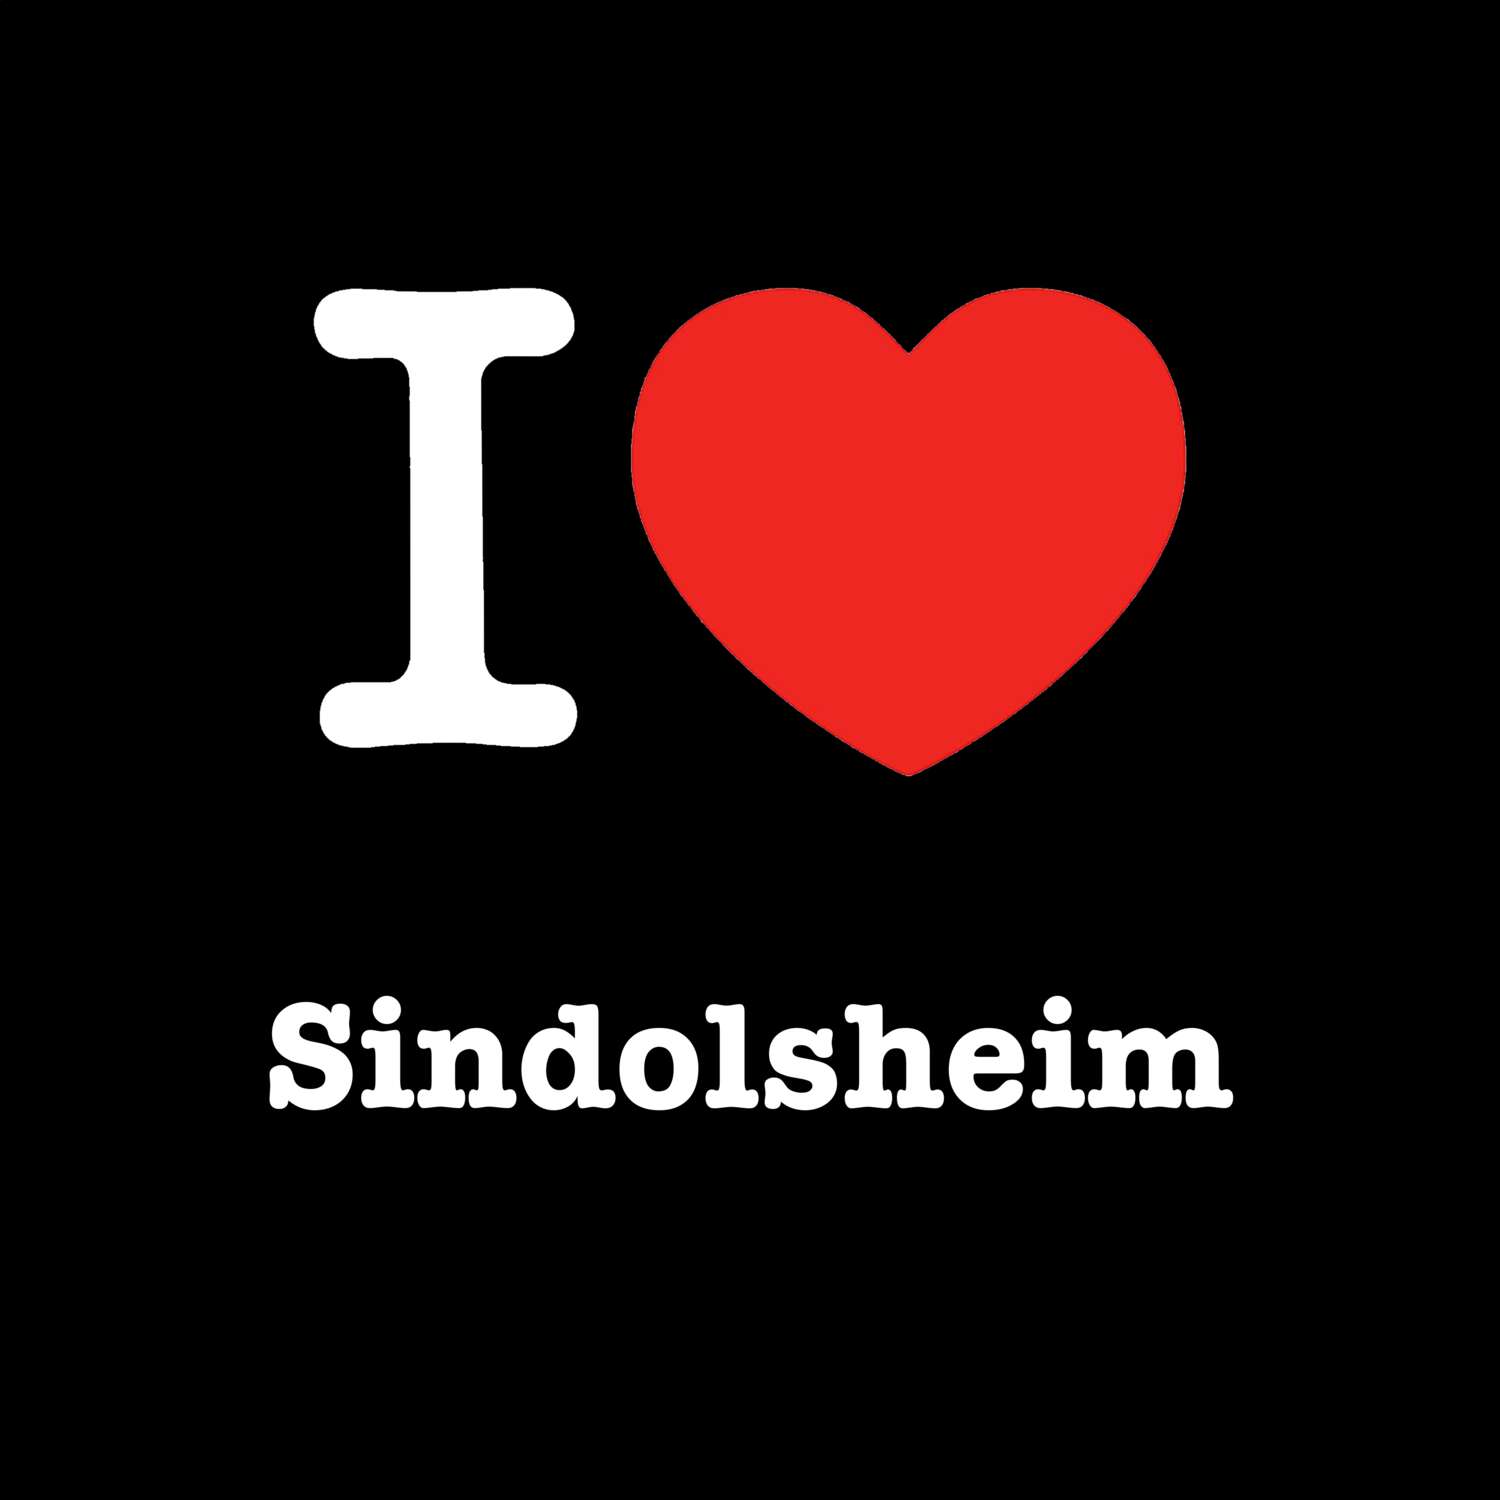 Sindolsheim T-Shirt »I love«